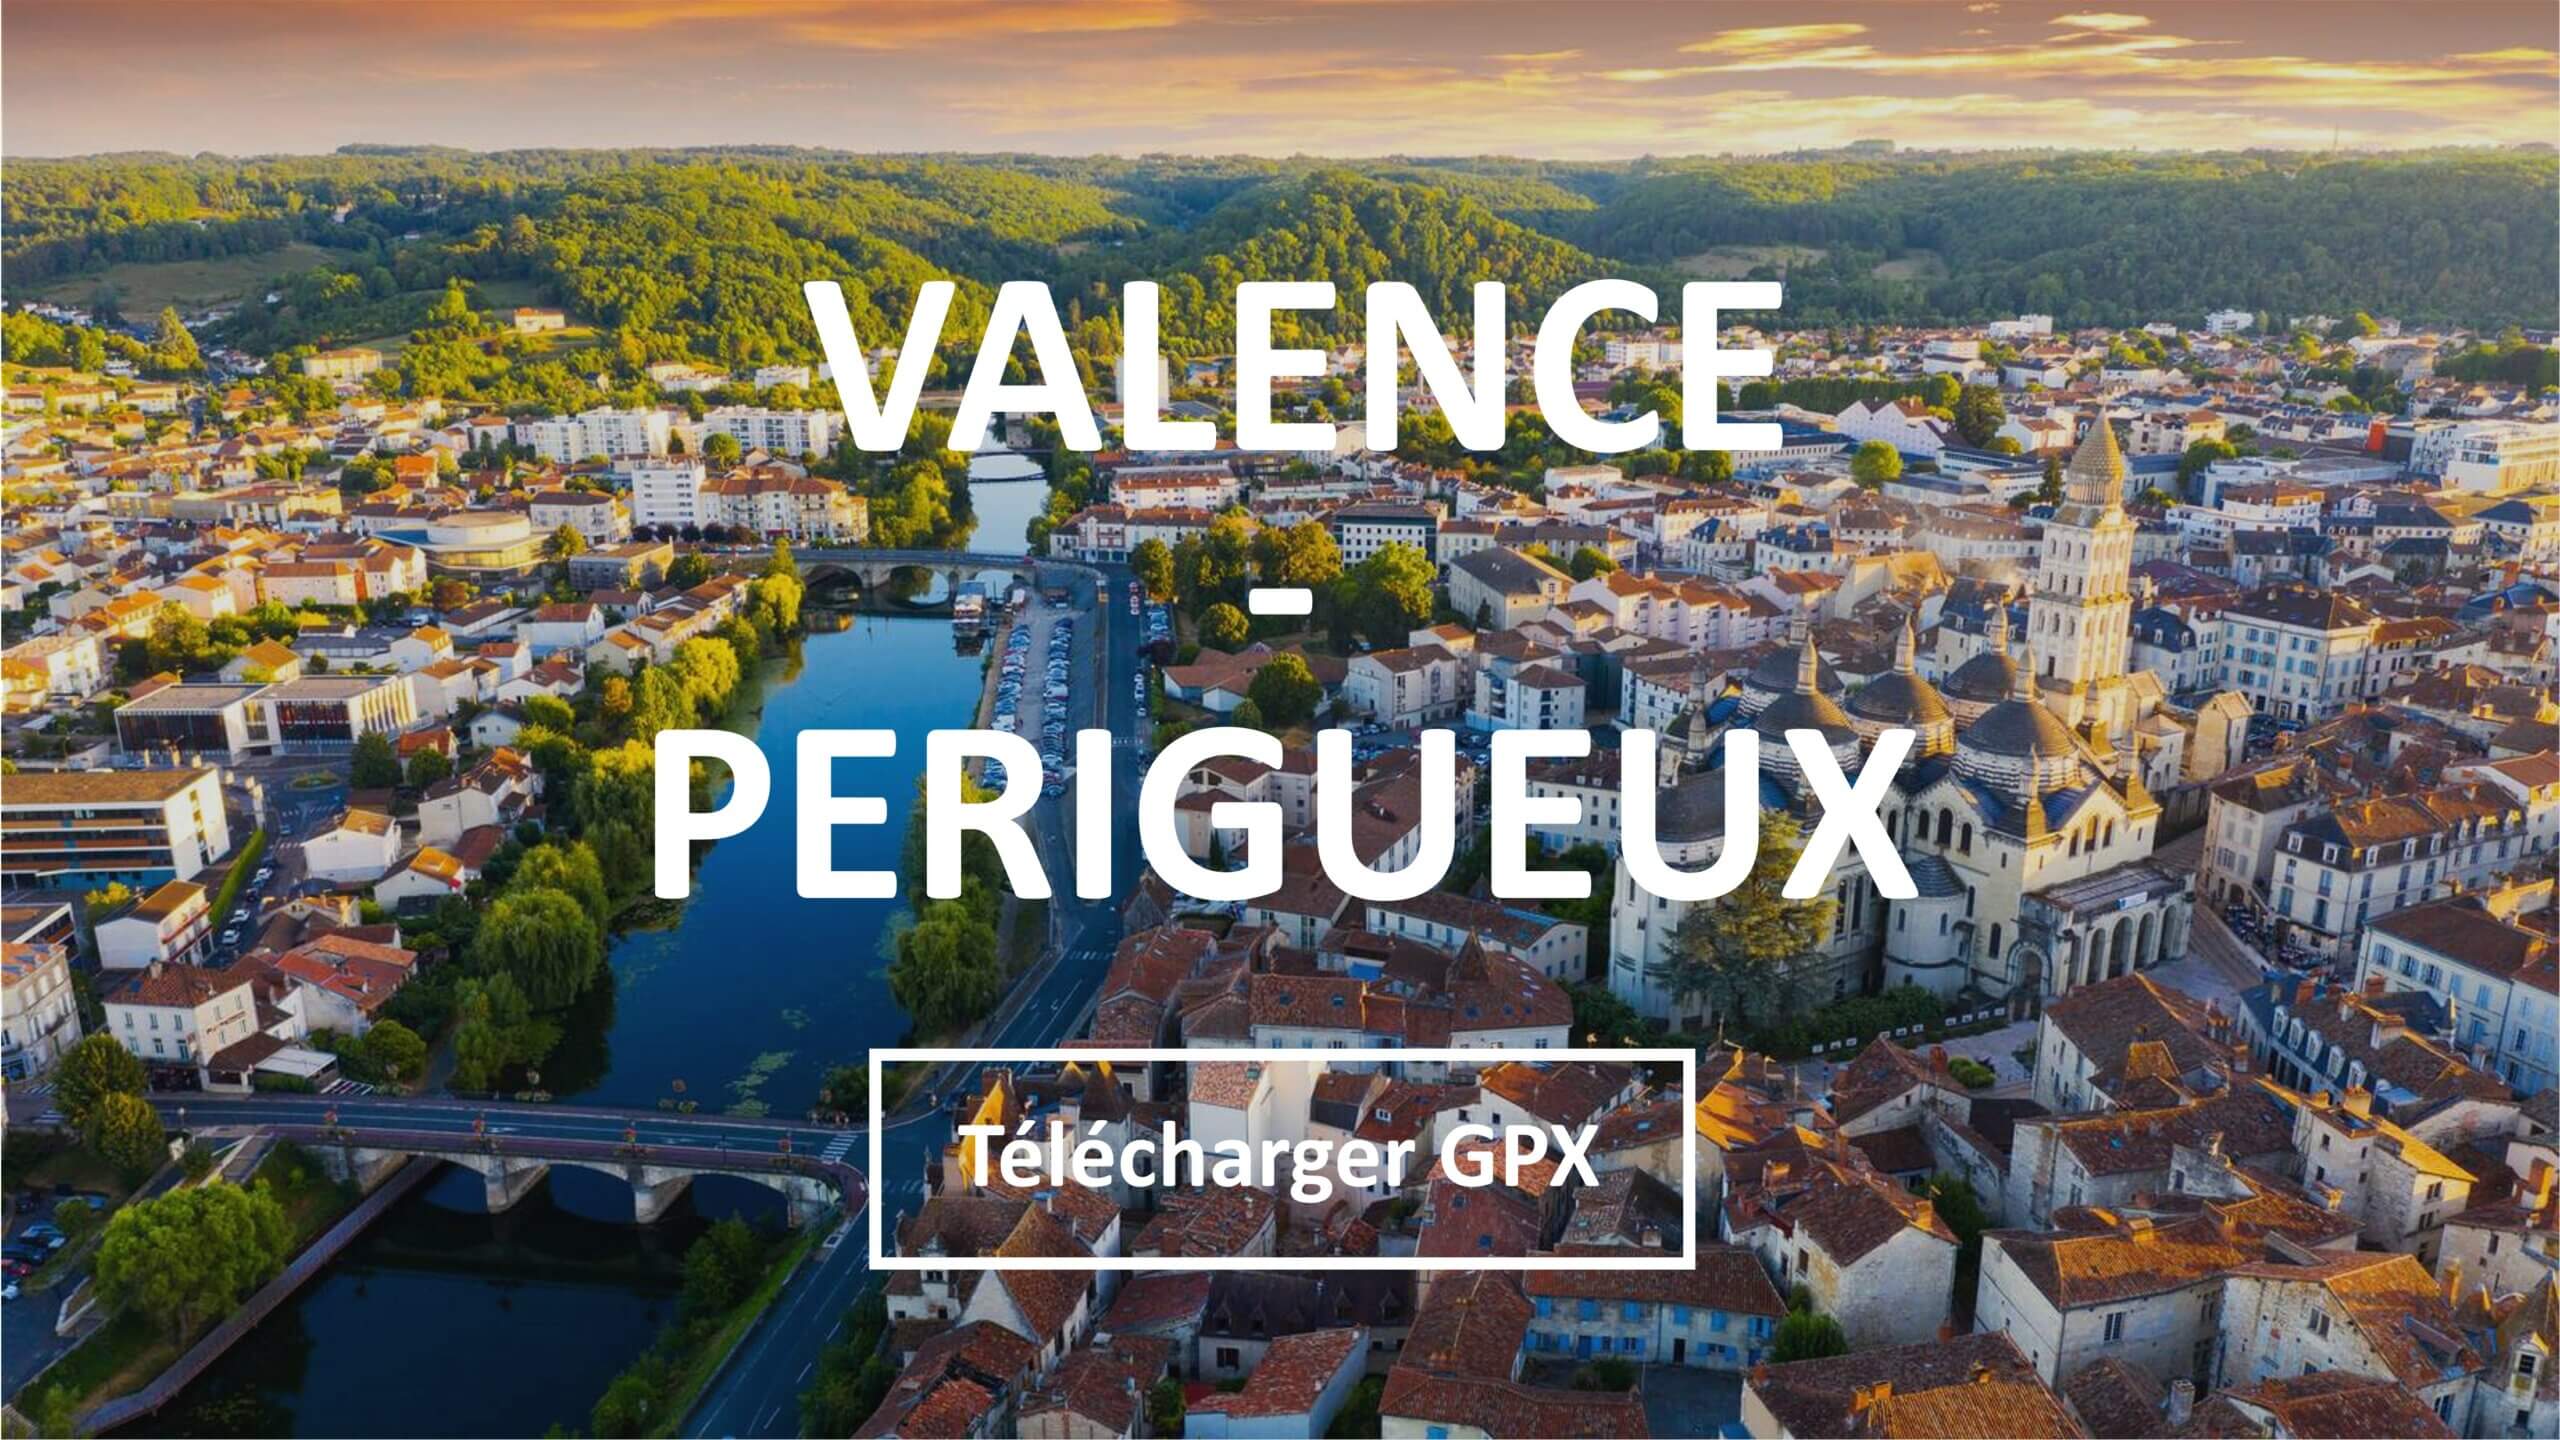 Pista ciclabile Valence – Périgueux: 430 km